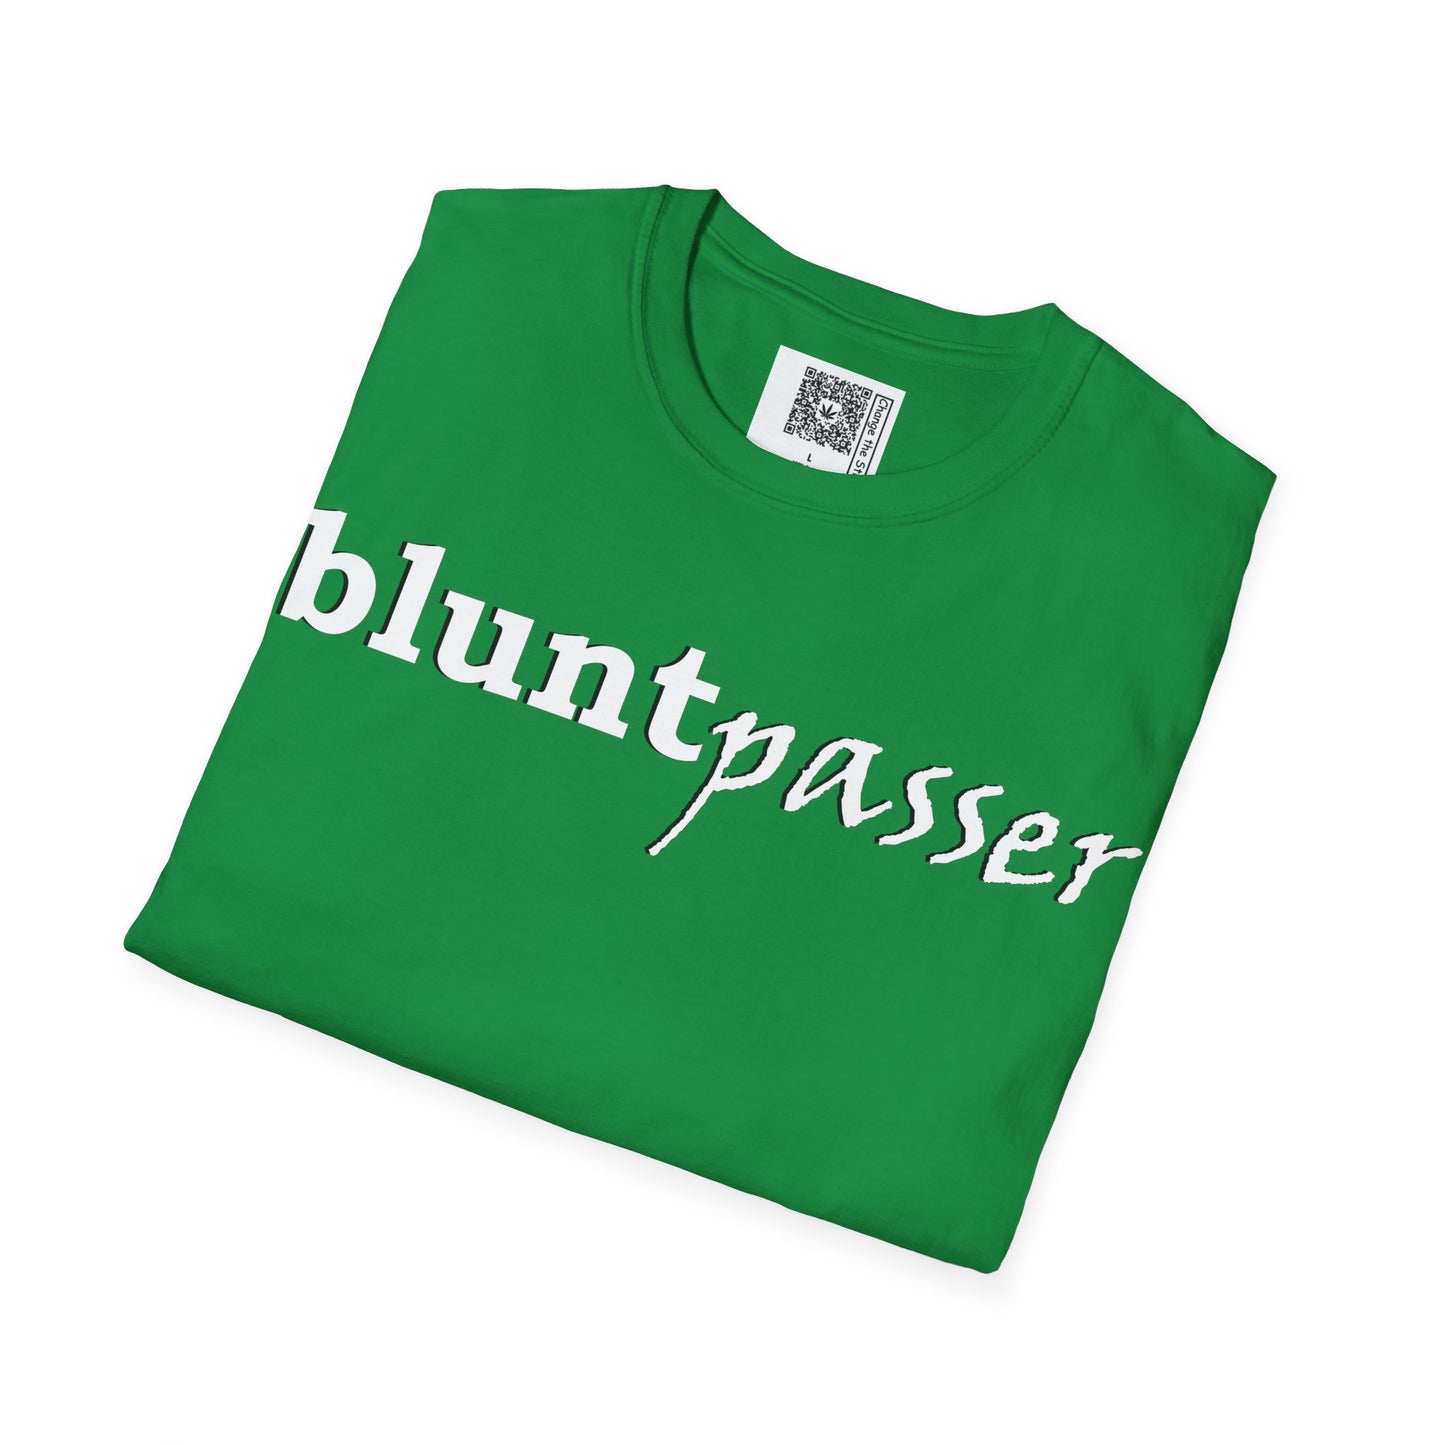 Change the Stigma, Irish Green color, shirt saying "blunt passer", Folded, Qr code is shown